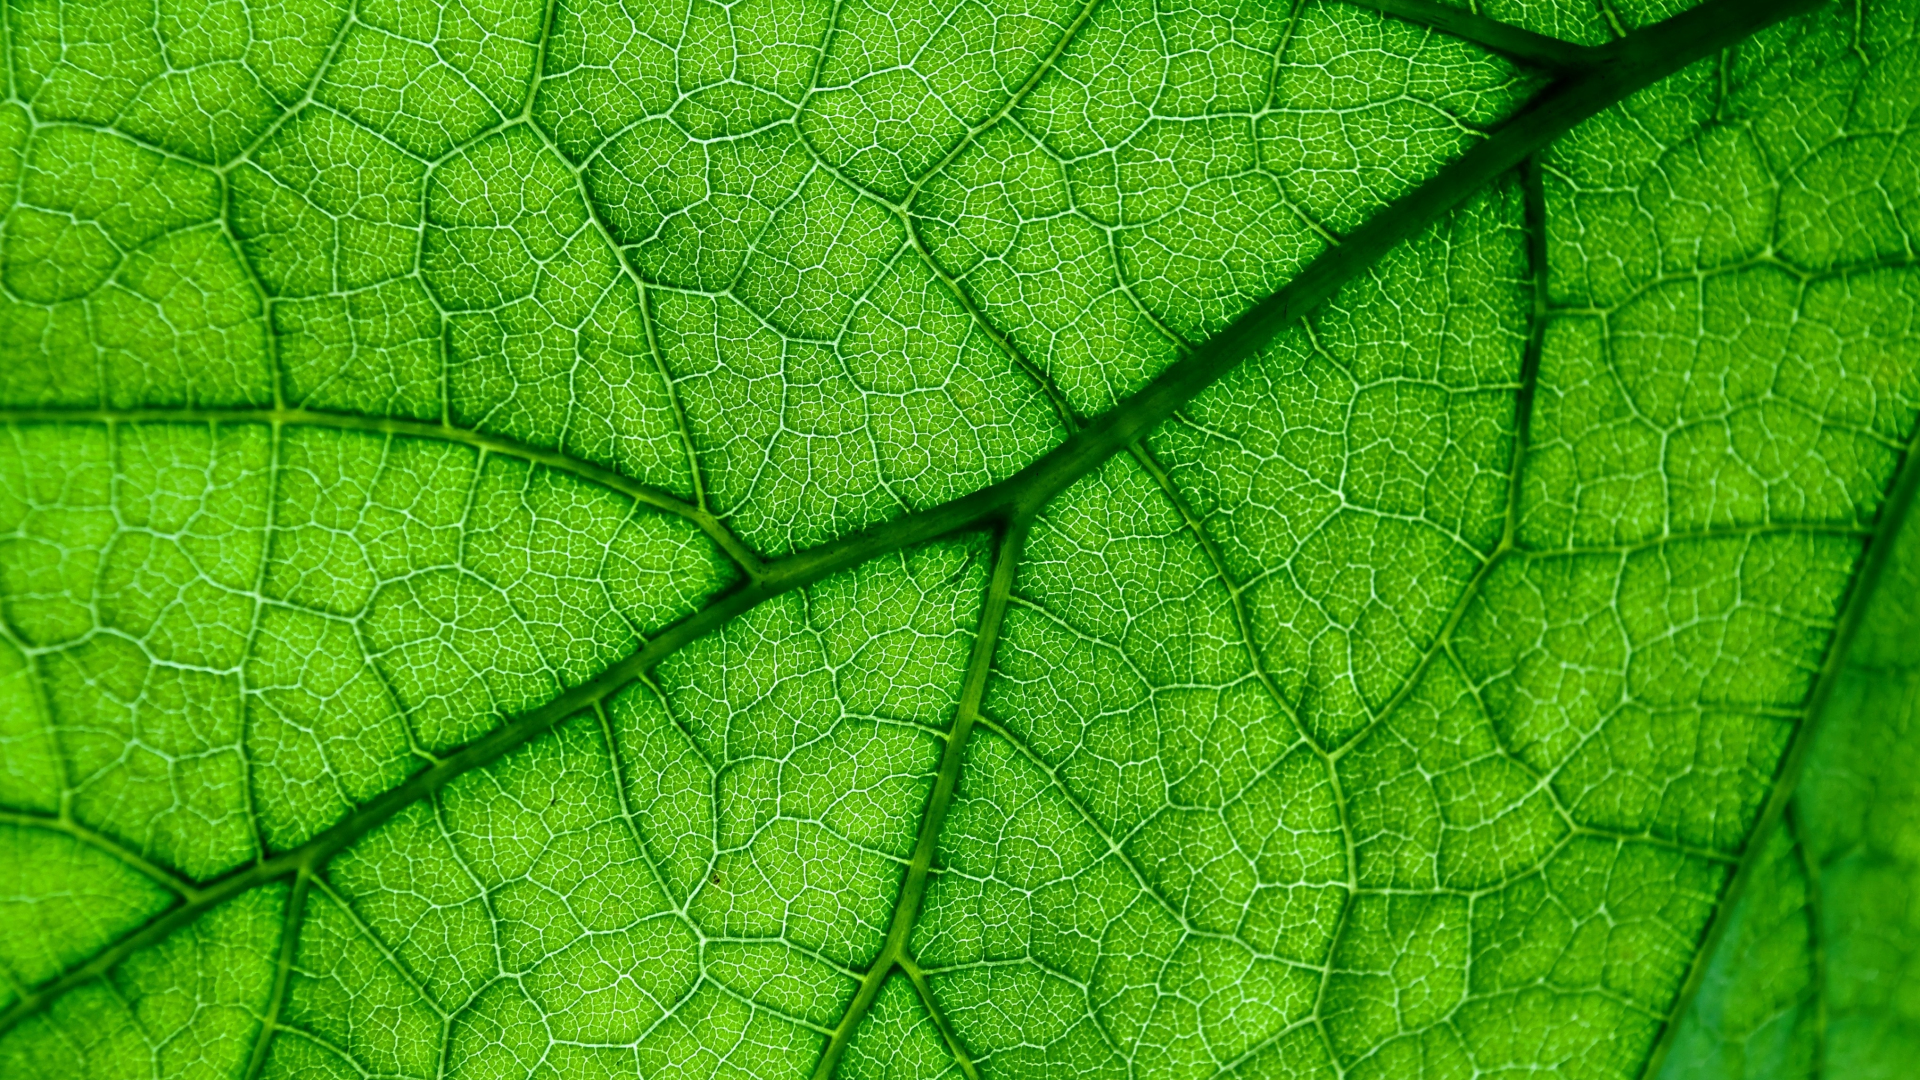 Download 1920x1080 wallpaper veins, close up, green leaf, full hd, hdtv ...